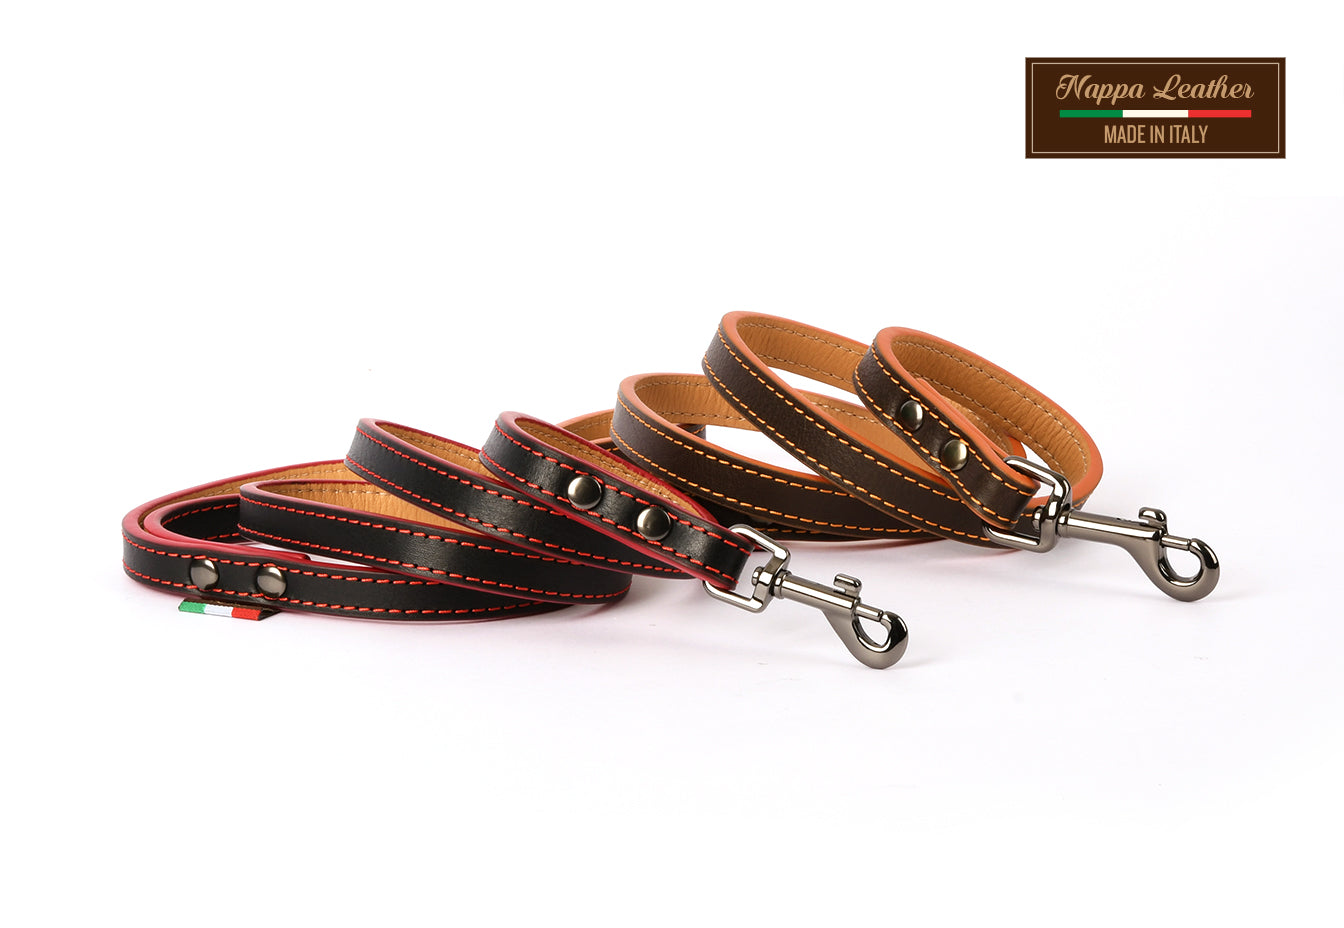 Lime Dog Leash & Collar set- PU Leather Designer Fashion Pet